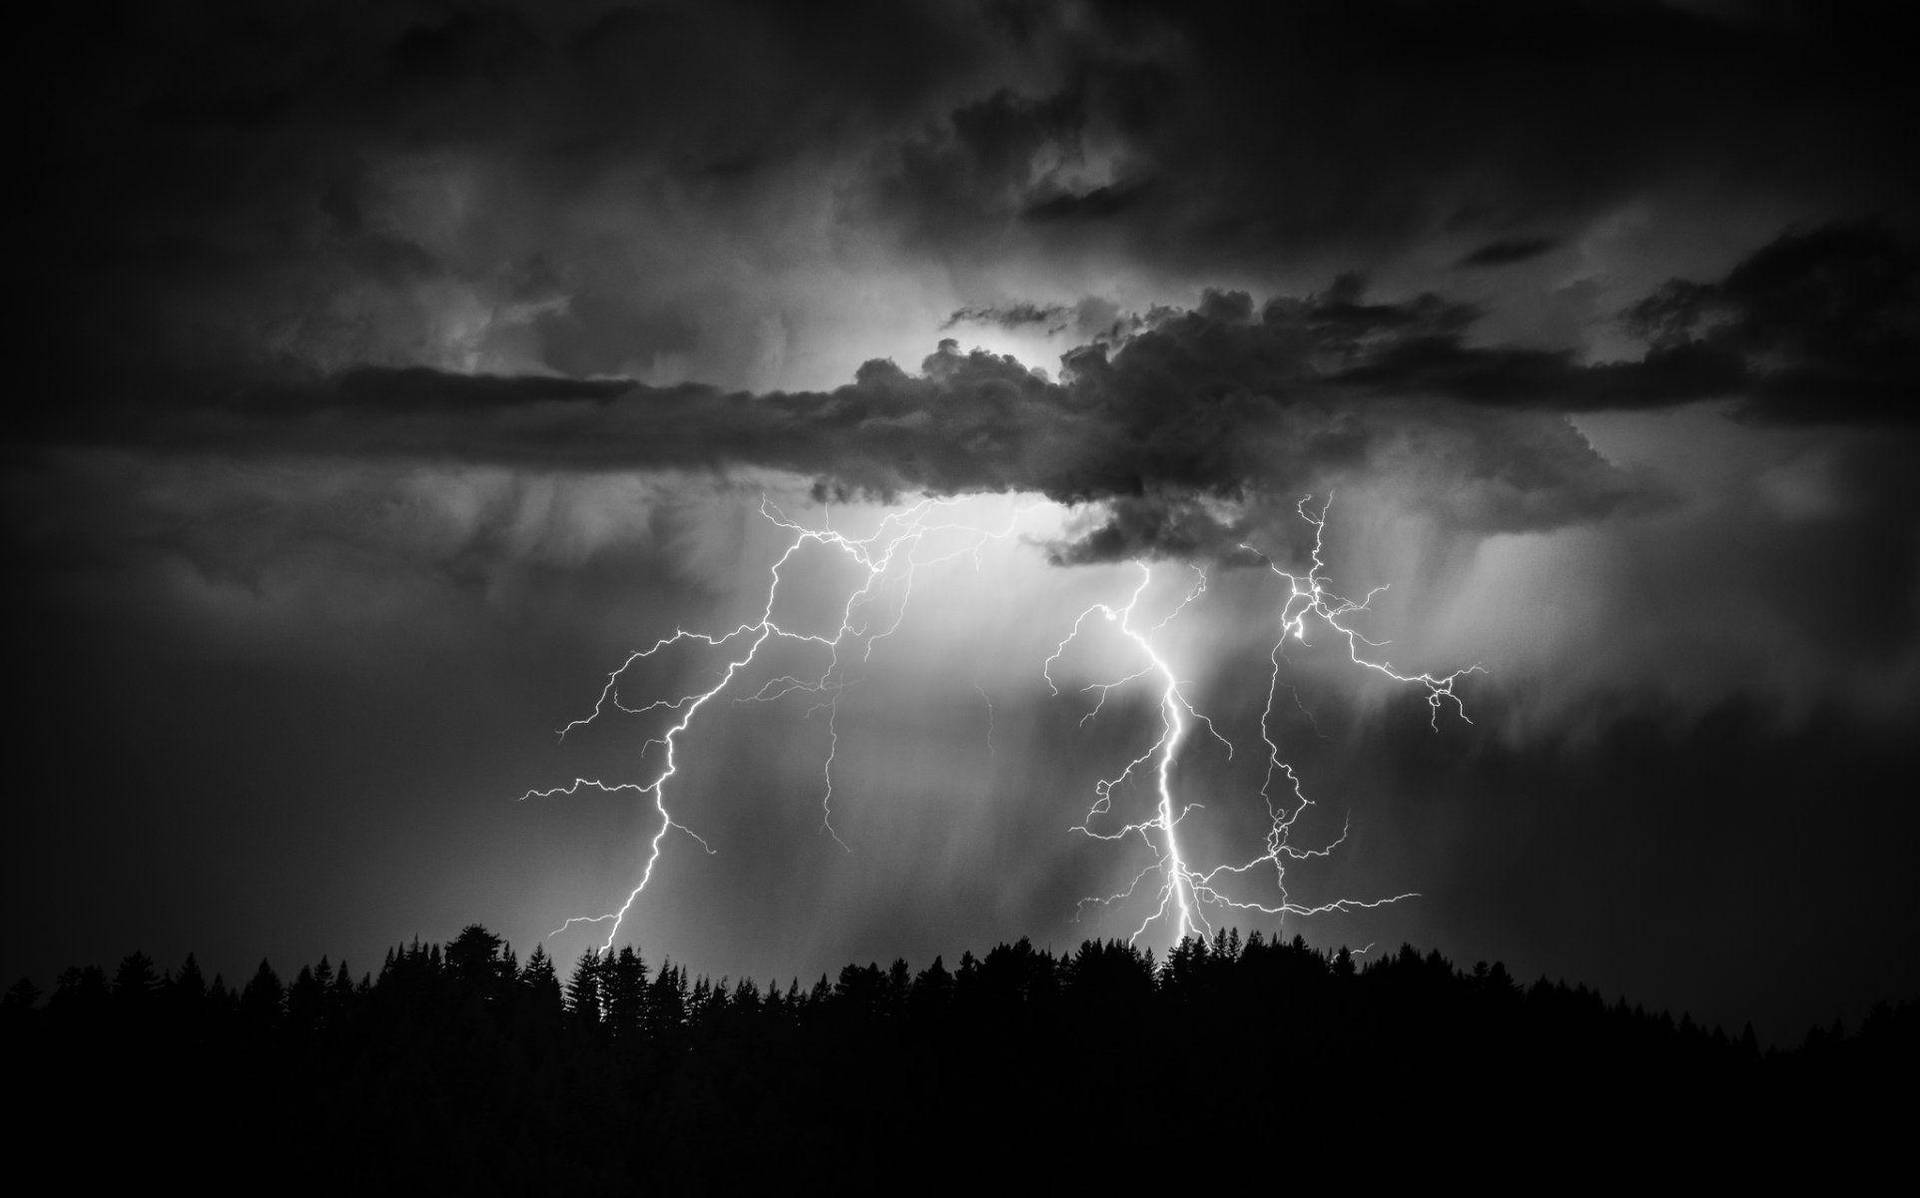 "Awe-inspiring Lightning Over a Stormy Sky" Wallpaper